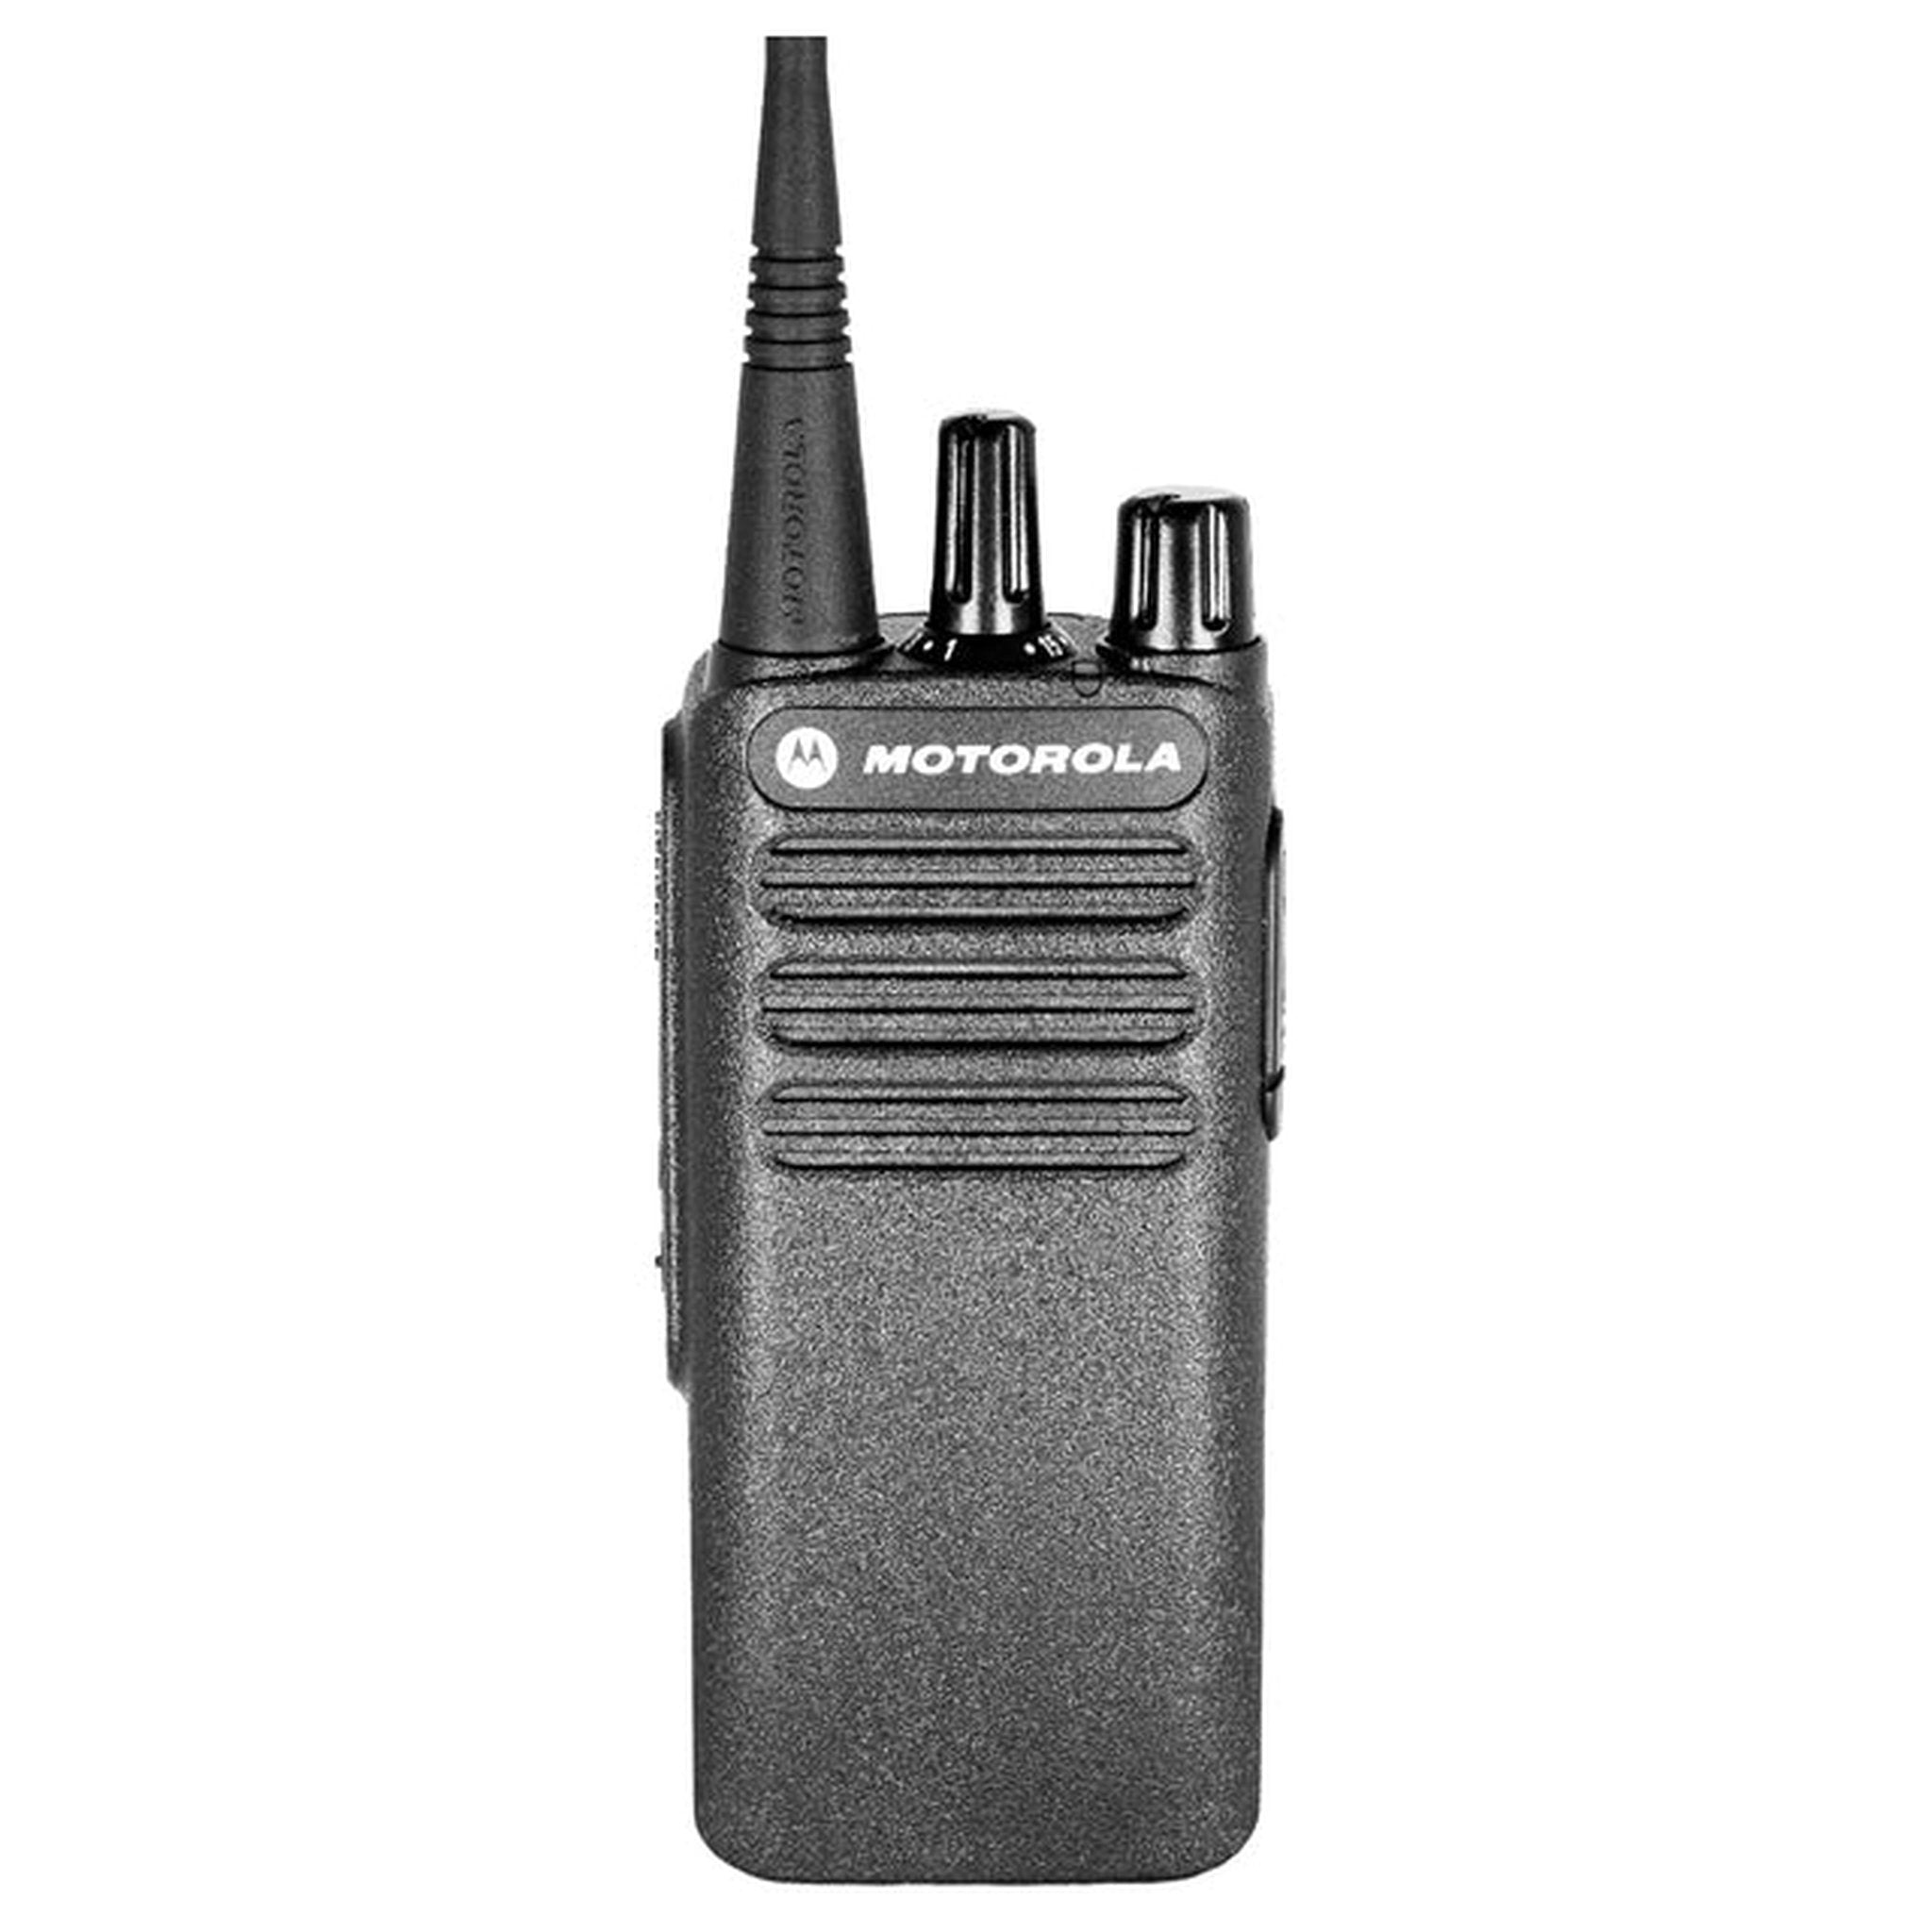 Motorola CP100d Two-Way Radio Handheld Portable in UHF or VHF